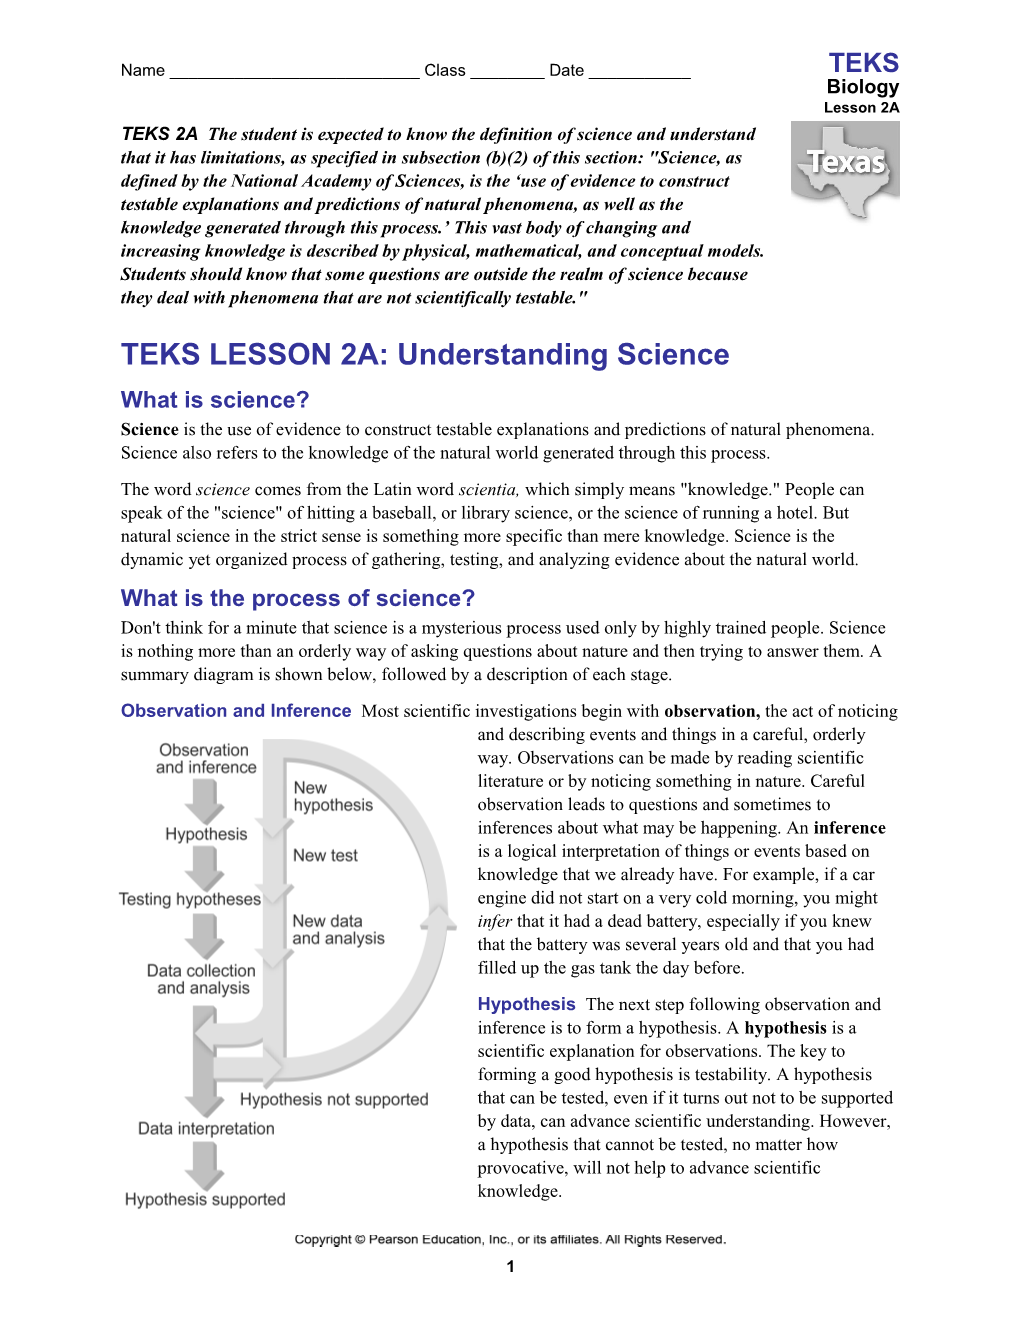 TEKS LESSON 2A: Understanding Science